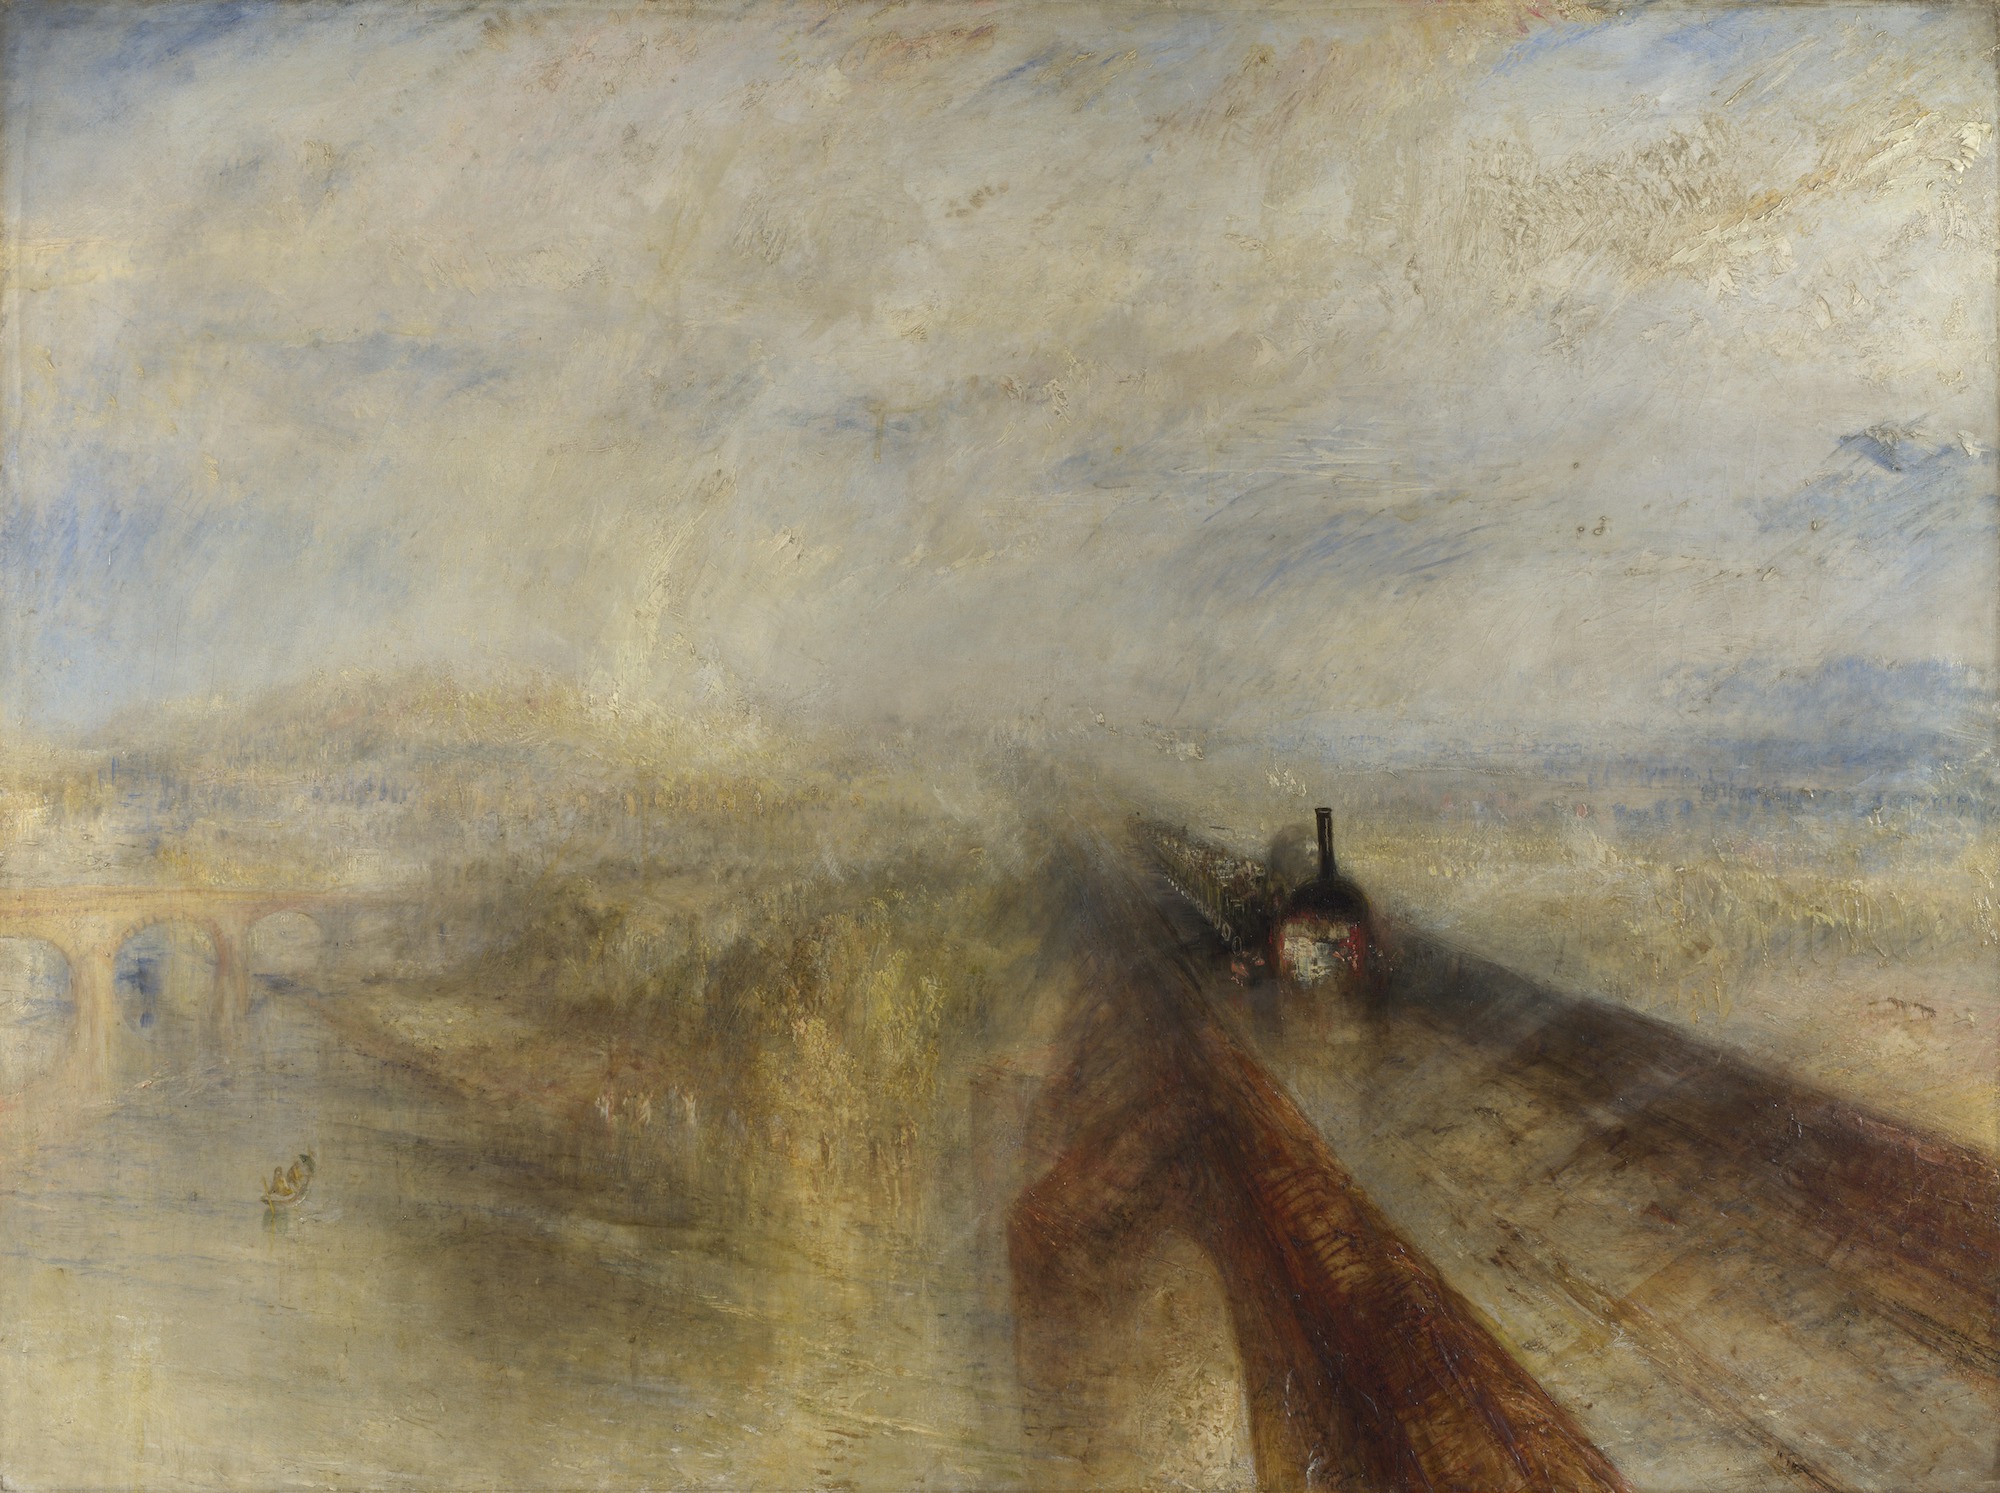 Eső, gőz és sebesség - a Nagy Nyugati Vasút by Joseph Mallord William Turner - 1844 - 91 x 122 cm 